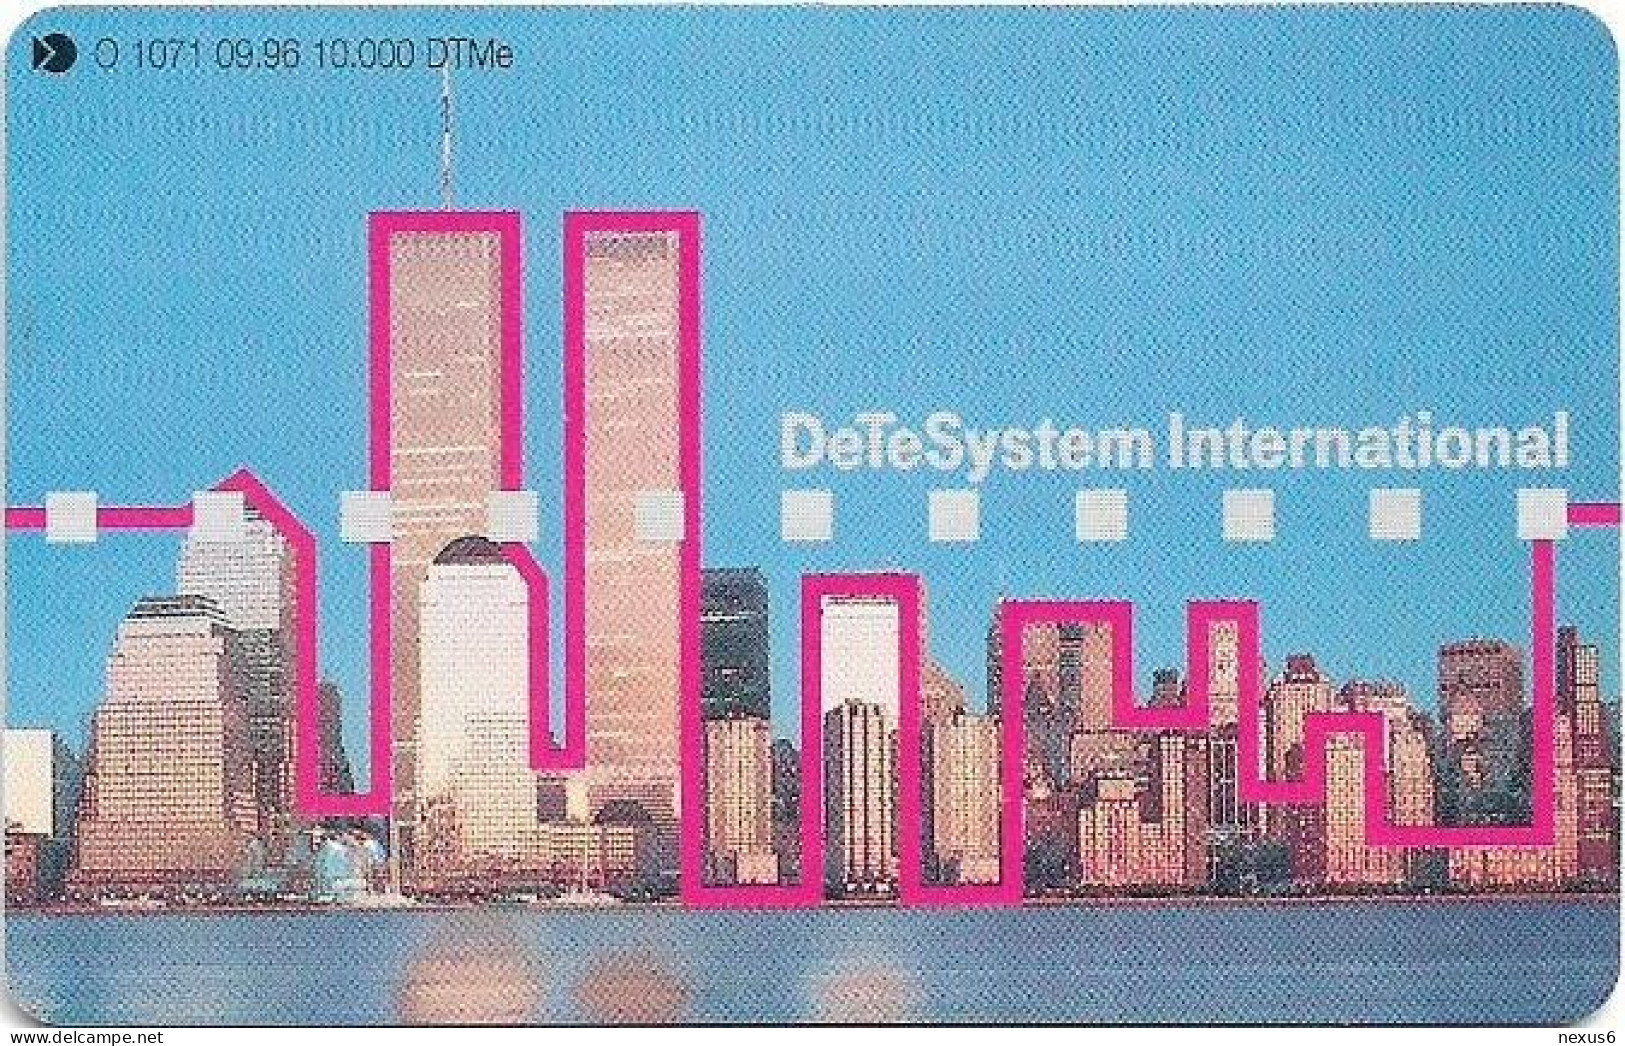 Germany - DeTeSystem International - New York - O 1071 - 09.1996, 6DM, 10.000ex, Used - O-Reeksen : Klantenreeksen